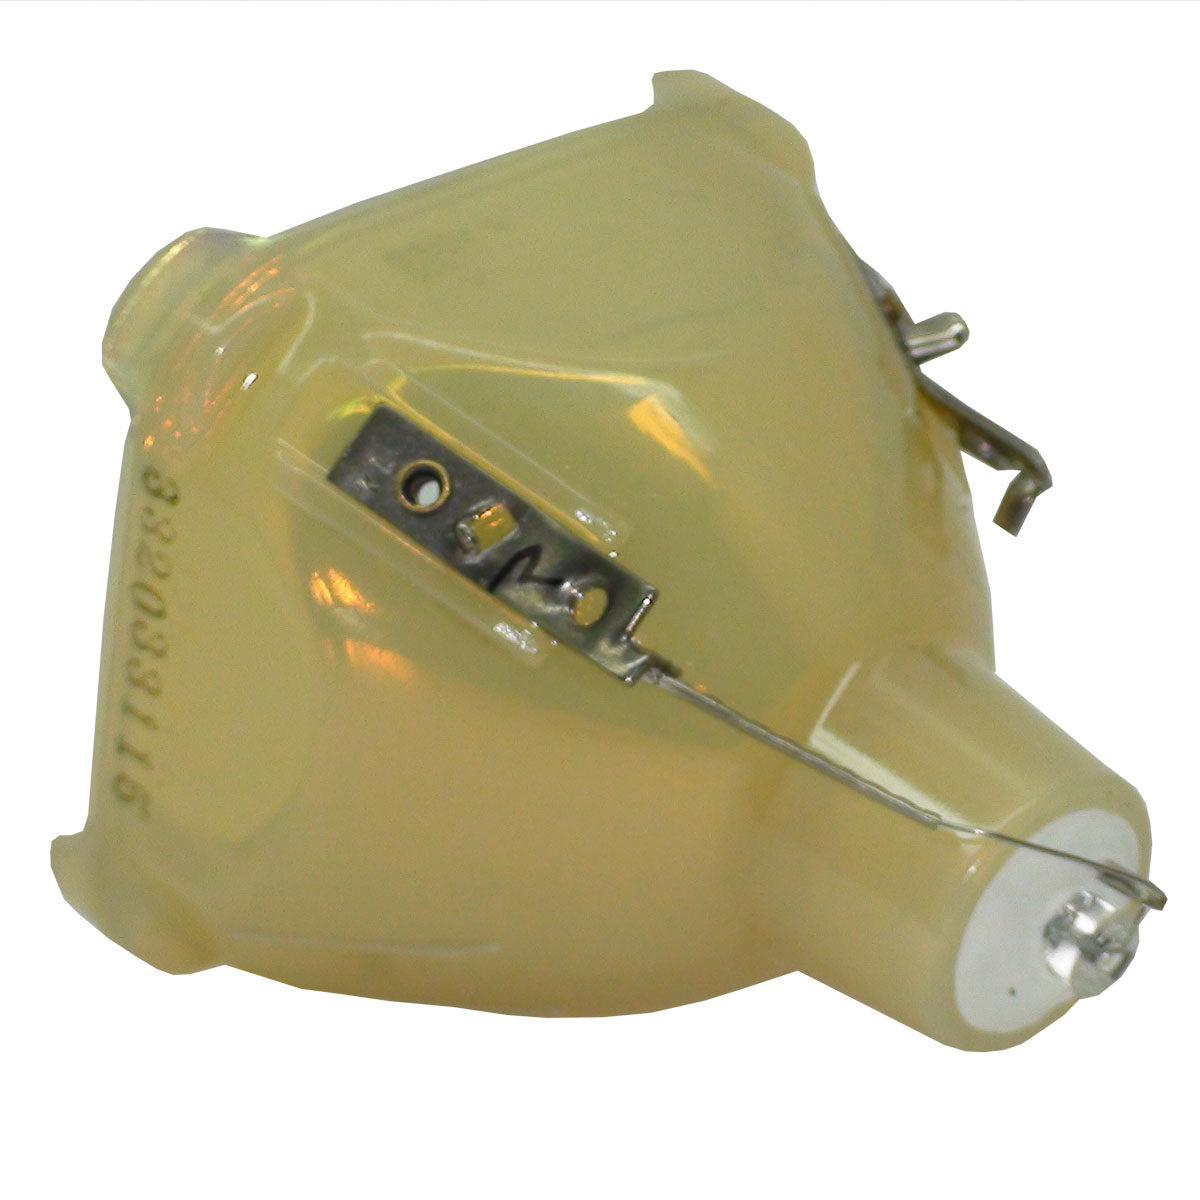 dukane 456-8043 Philips Projector Bare Lamp